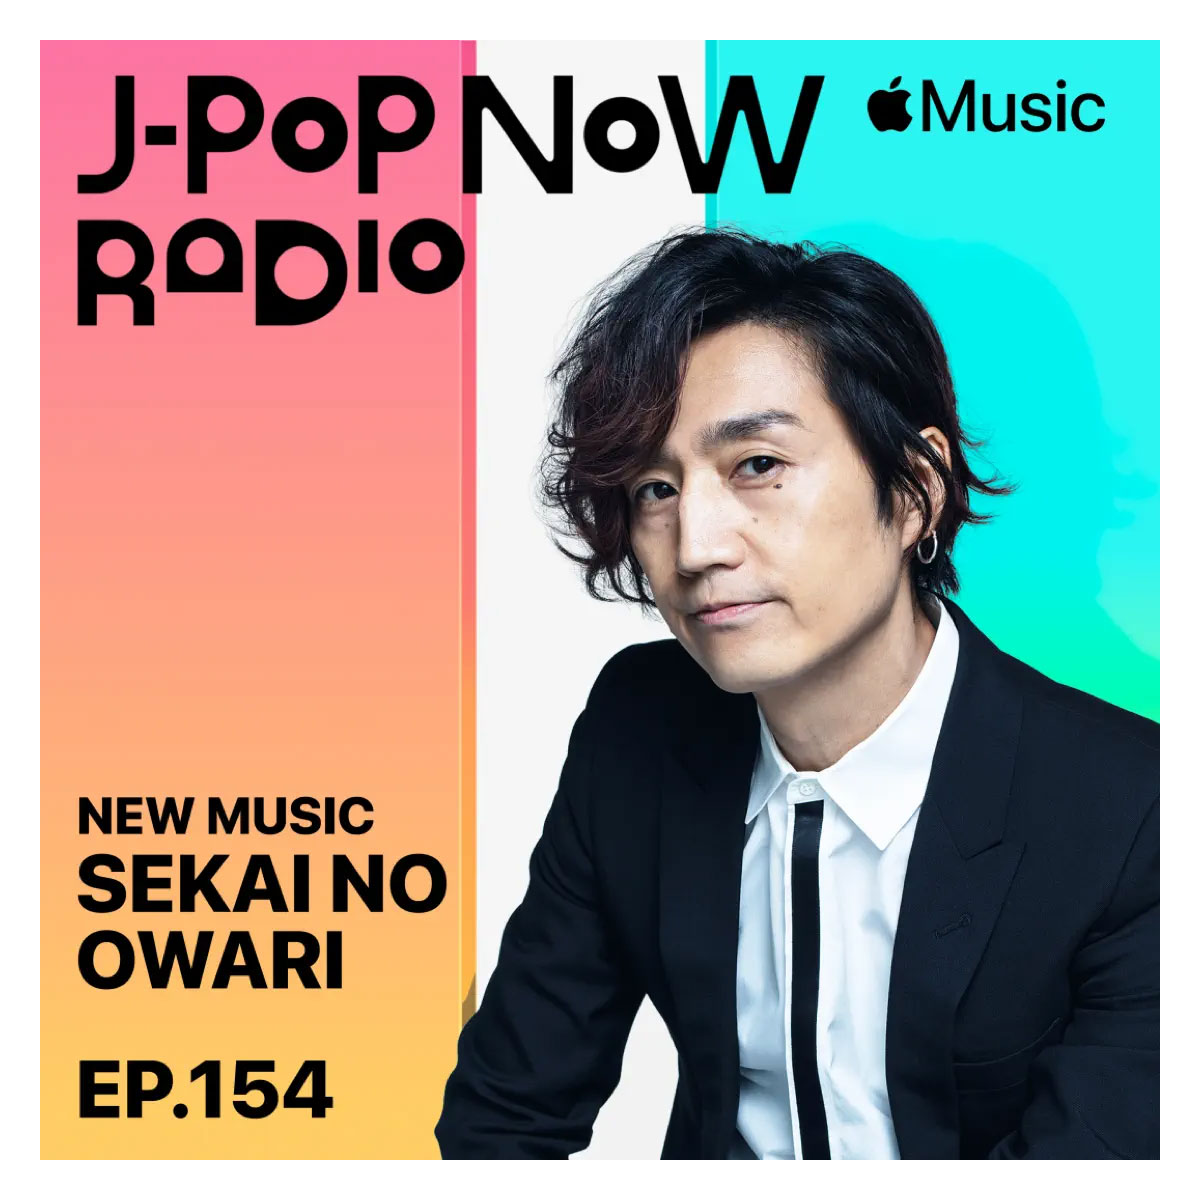 J-Pop Now Radio with Kentaro Ochiai 特集：SEKAI NO OWARI